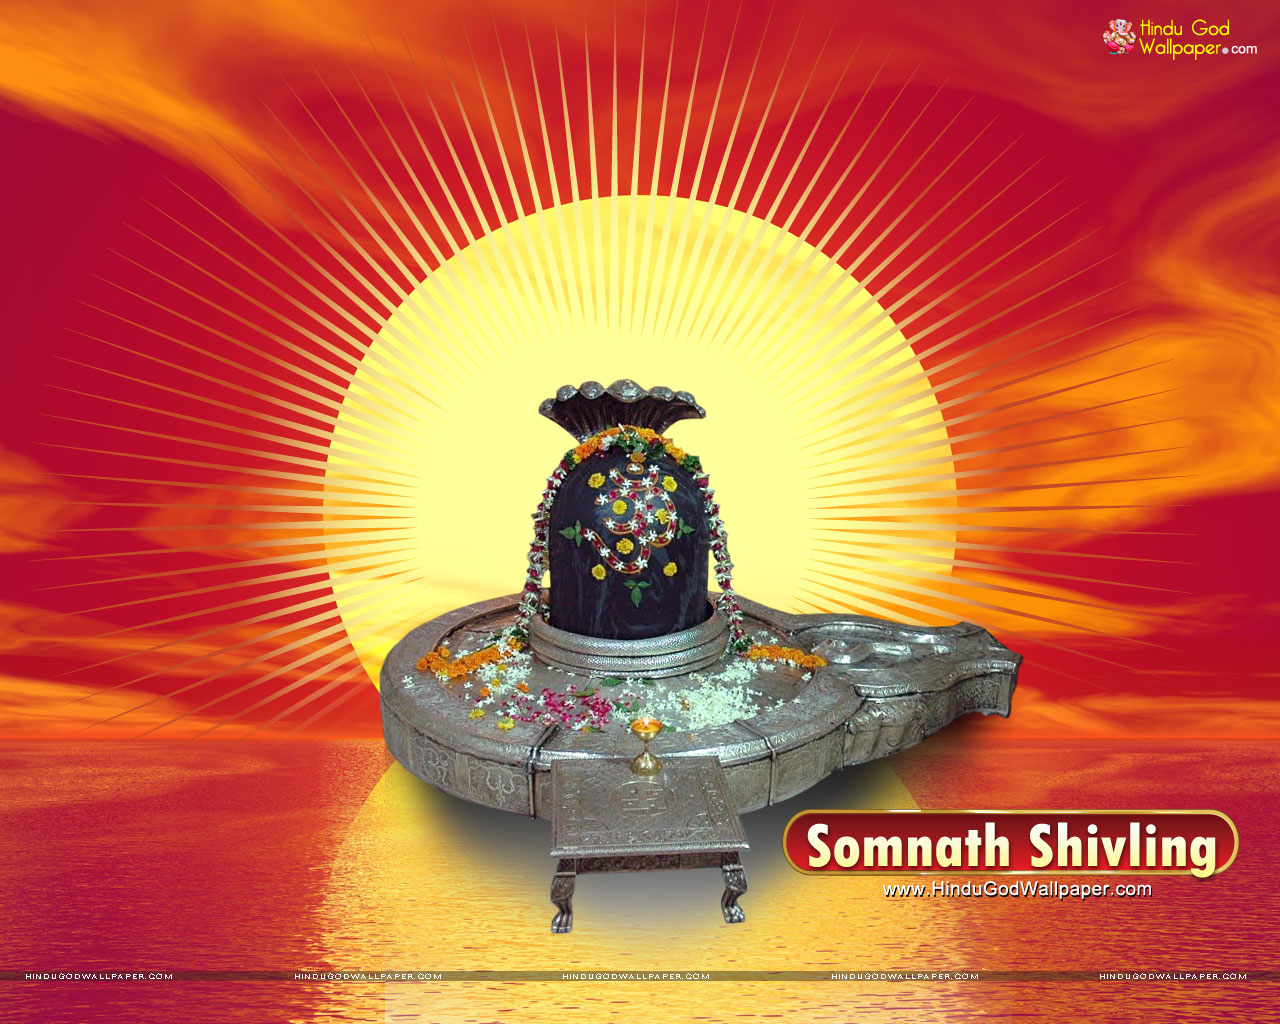 Somnath Shivling Wallpapers Free Download